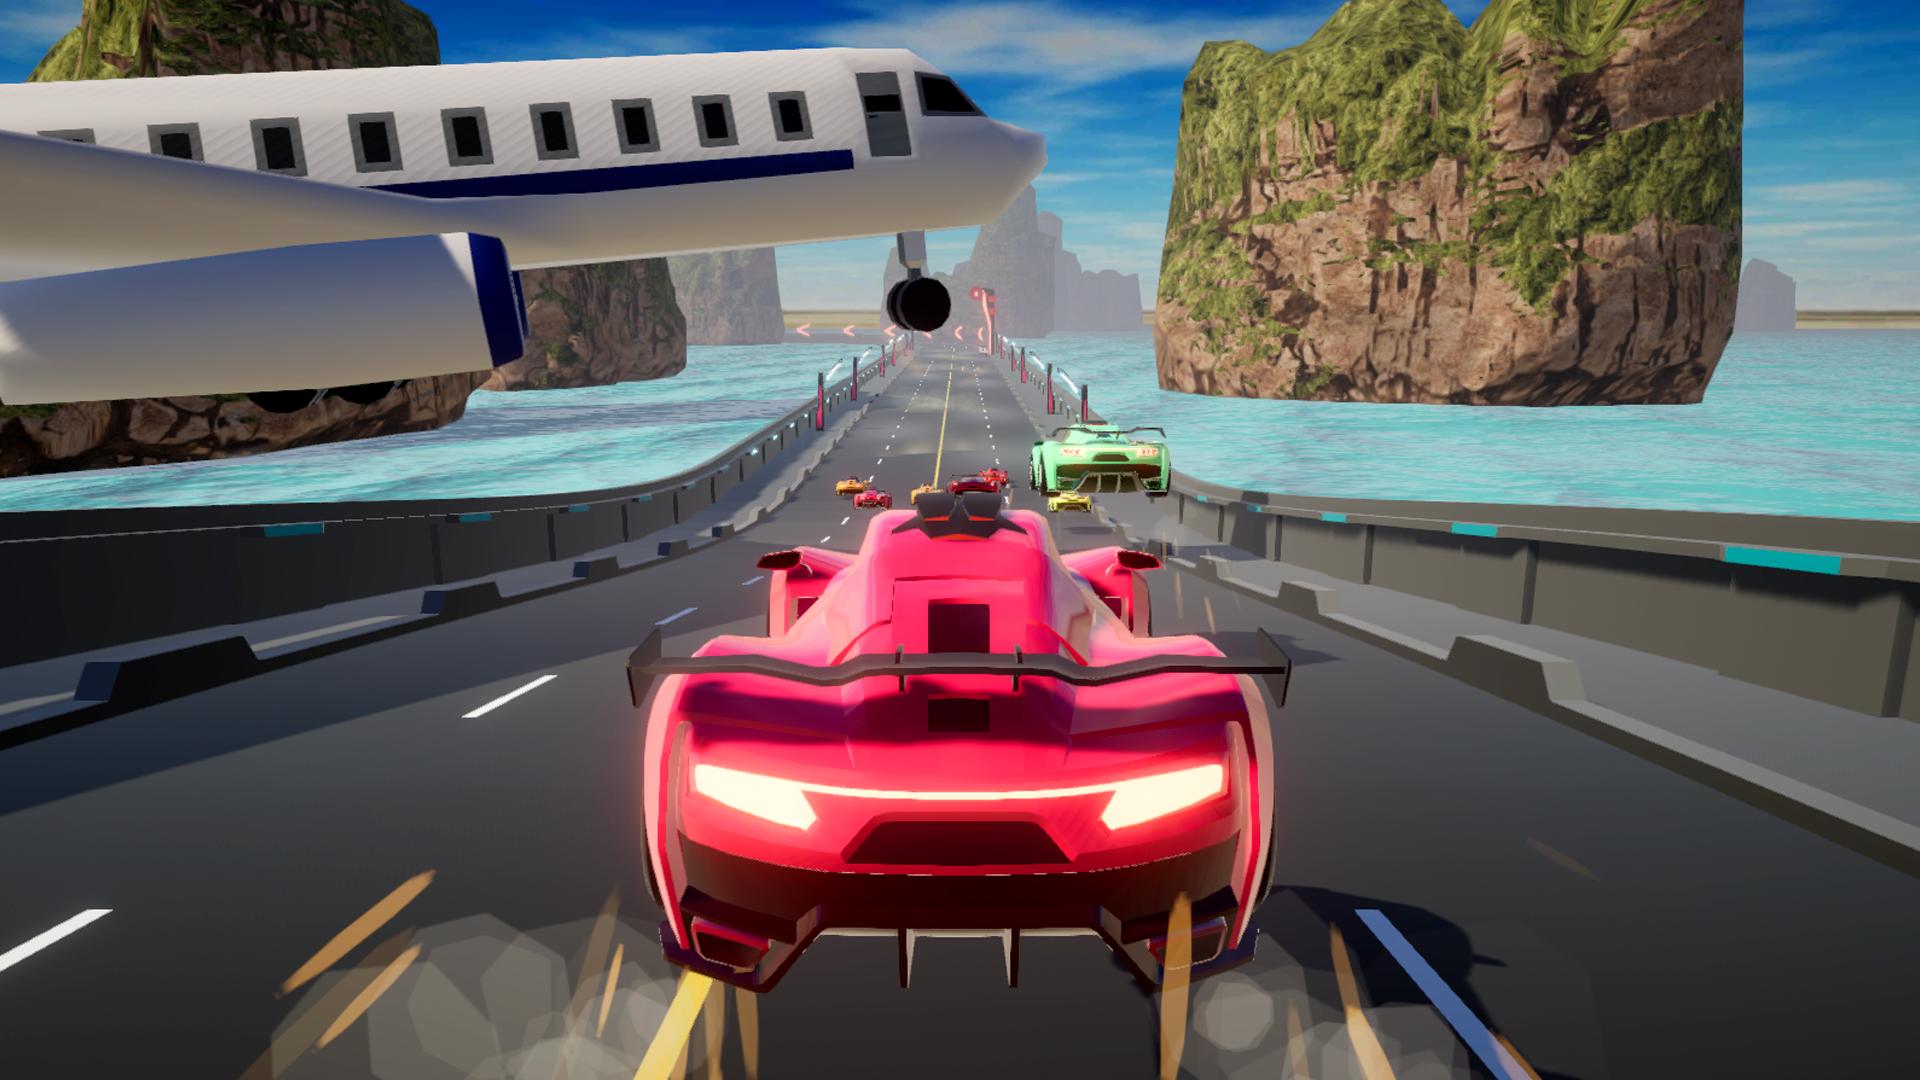 Velocity Legends Asphalt Car Action Racing Game 1.43 Screenshot 22